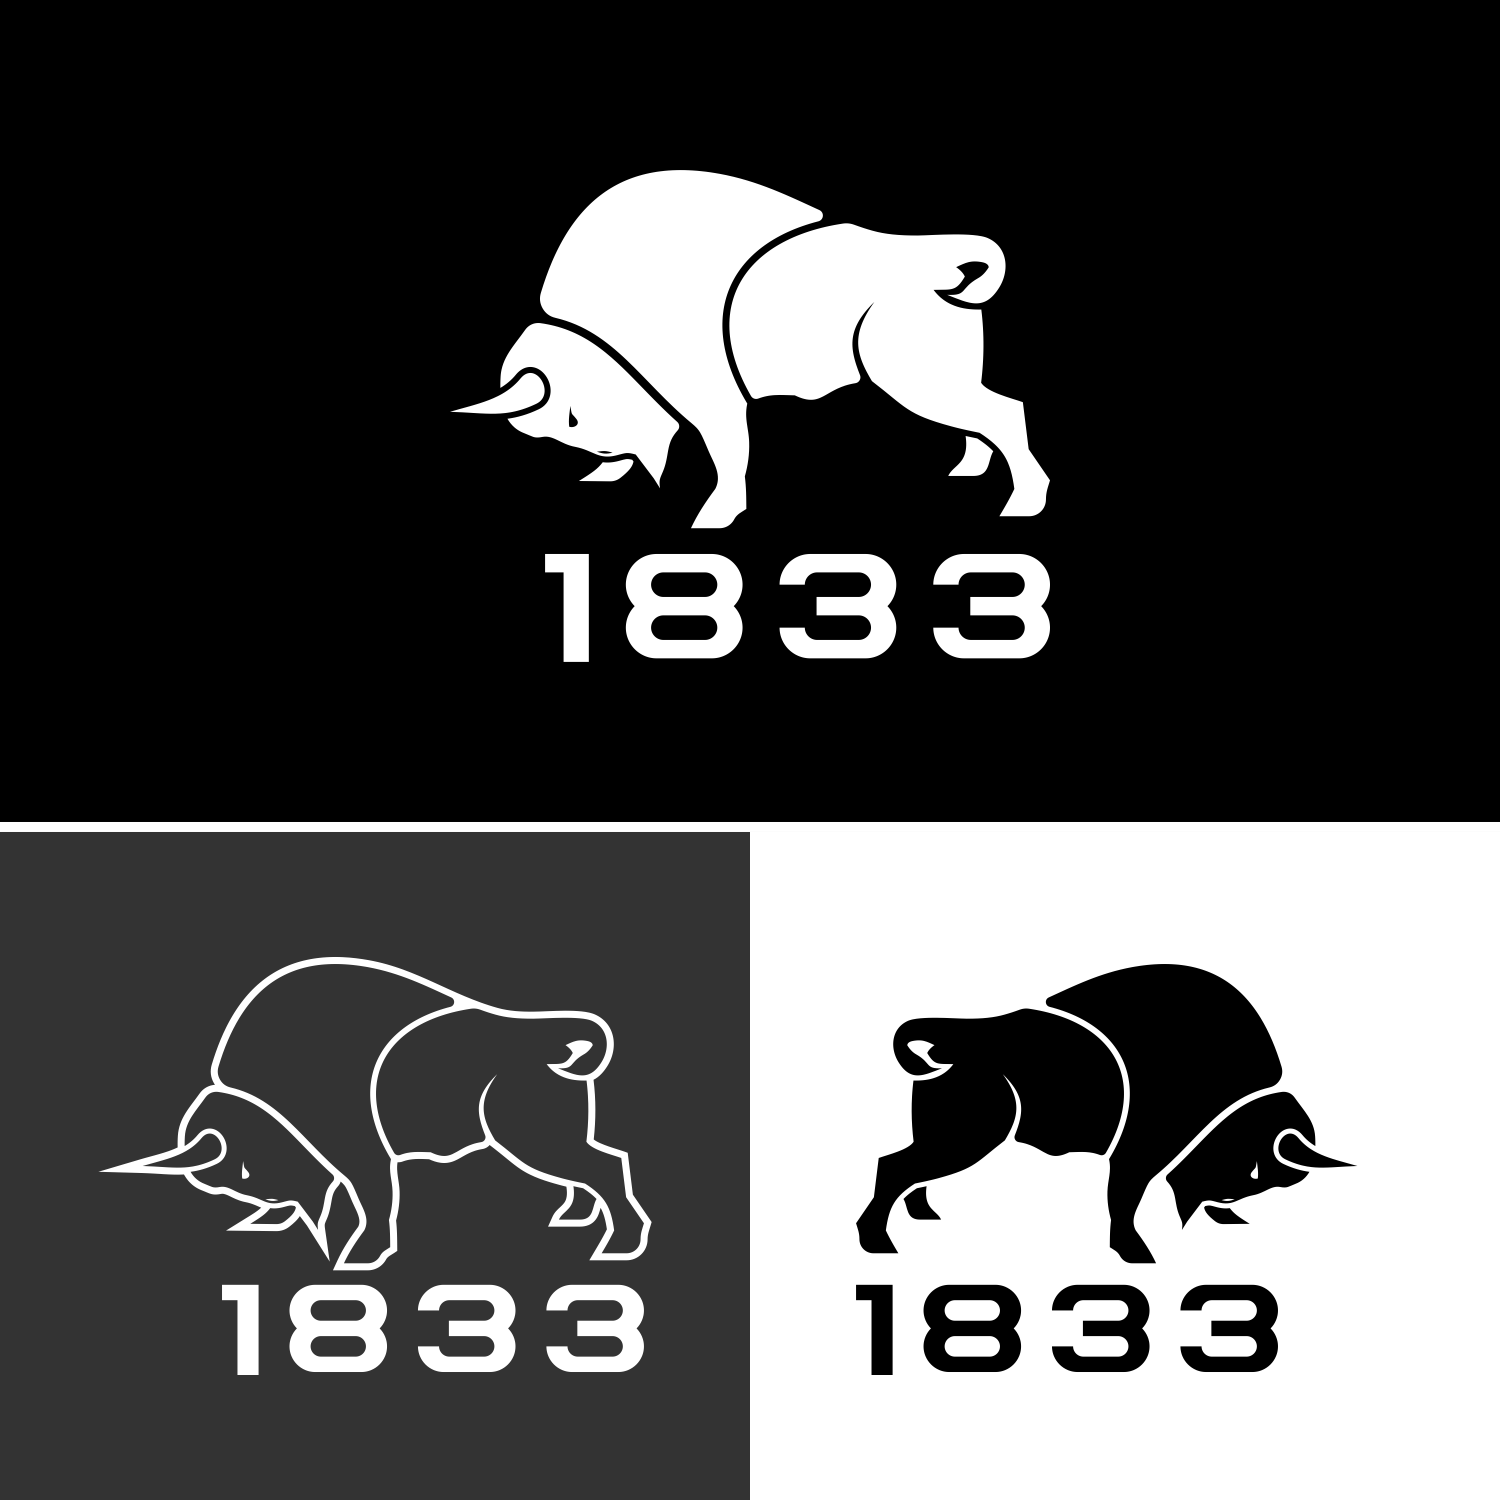 Clothing Buffalo Logo - Bold, Masculine, Clothing Logo Design for Polar Buffalo or PB or ...